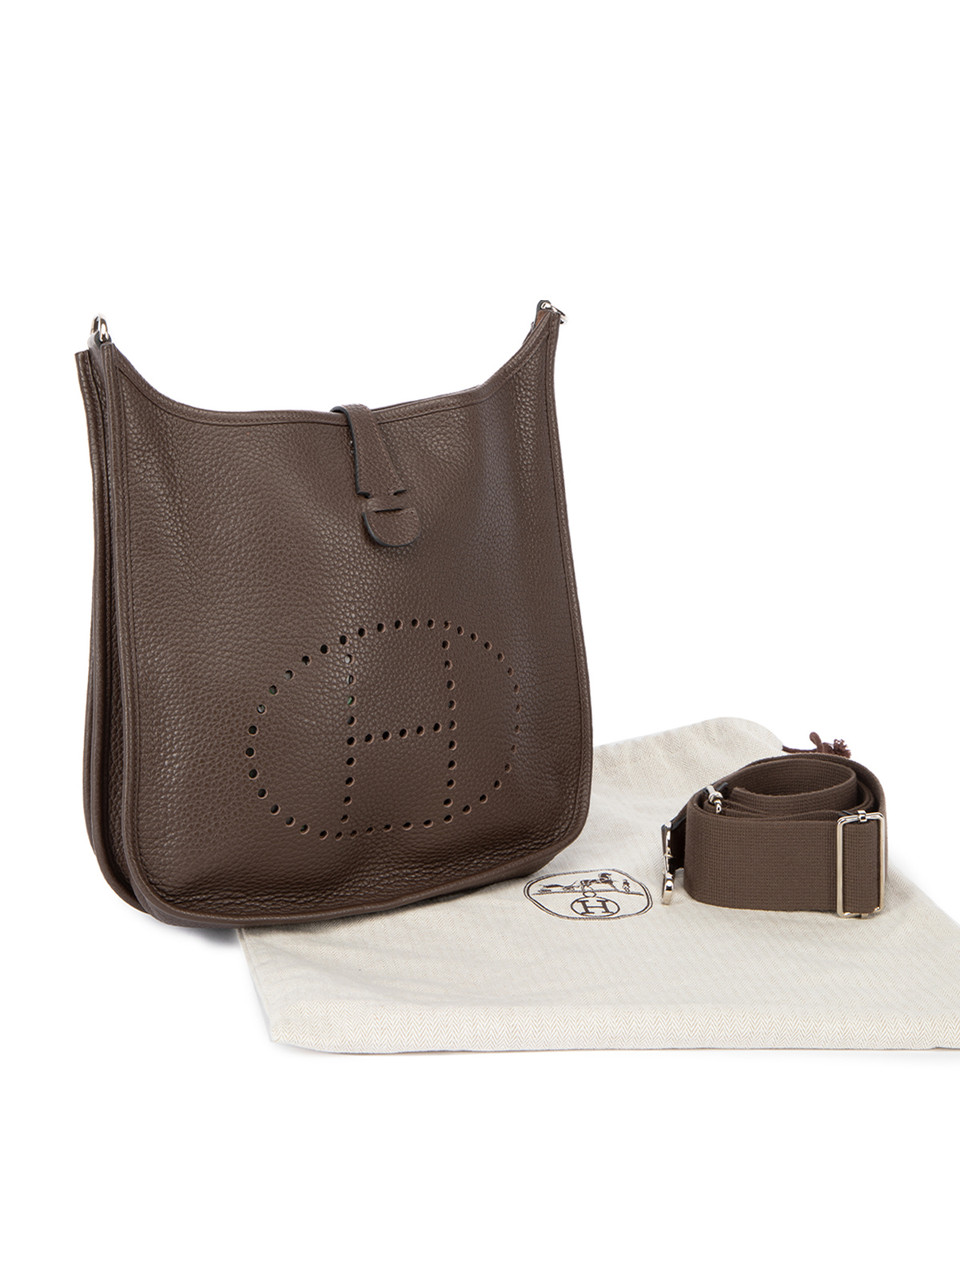 Hermès Brown Leather Evelyne PM Bag